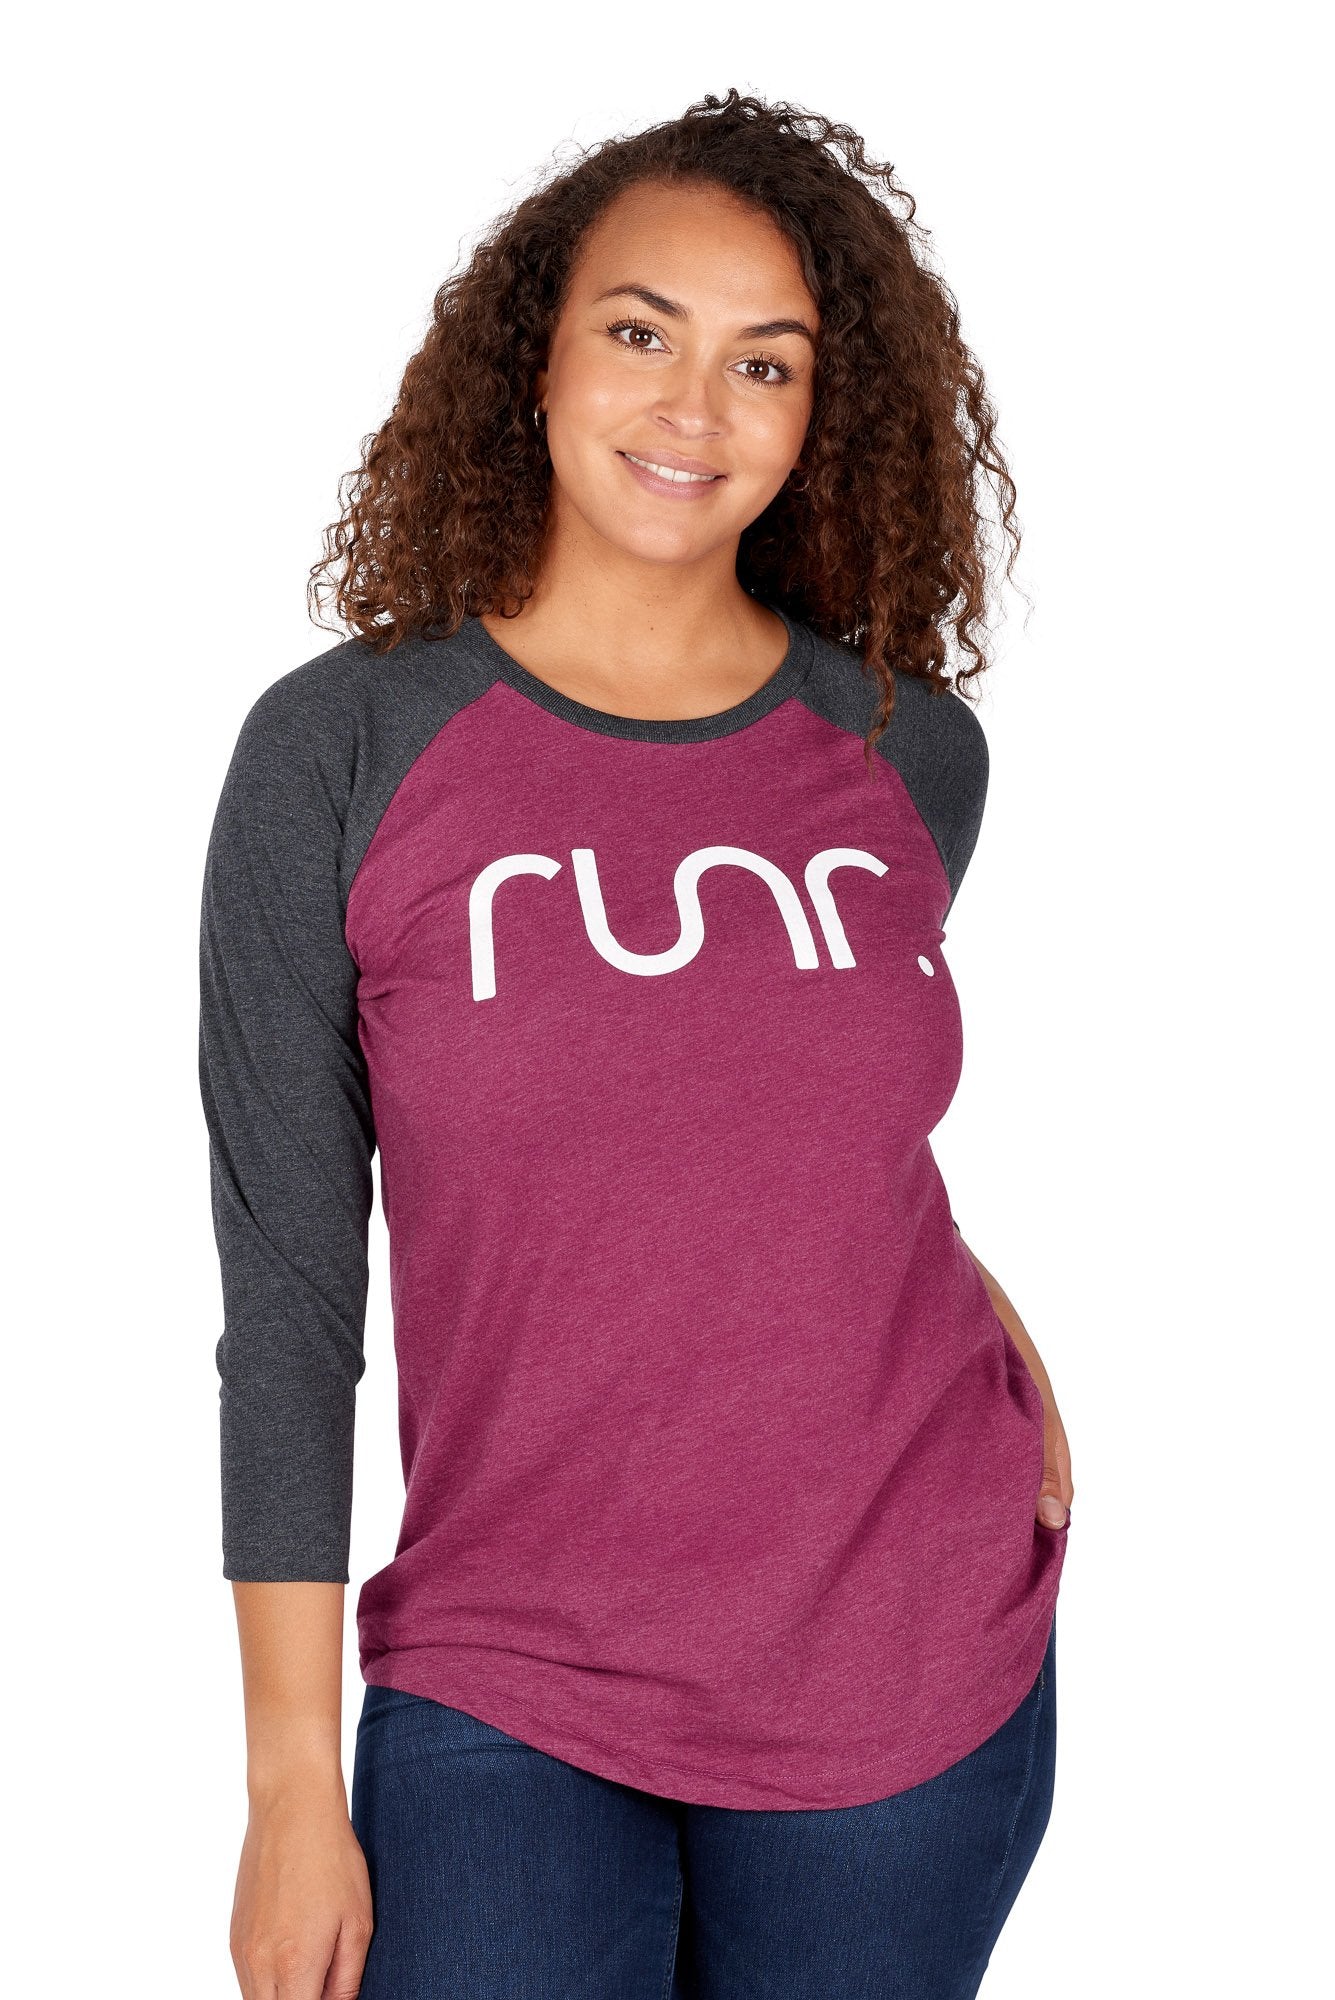 Women's Baseball Runr T-Shirts - Plum